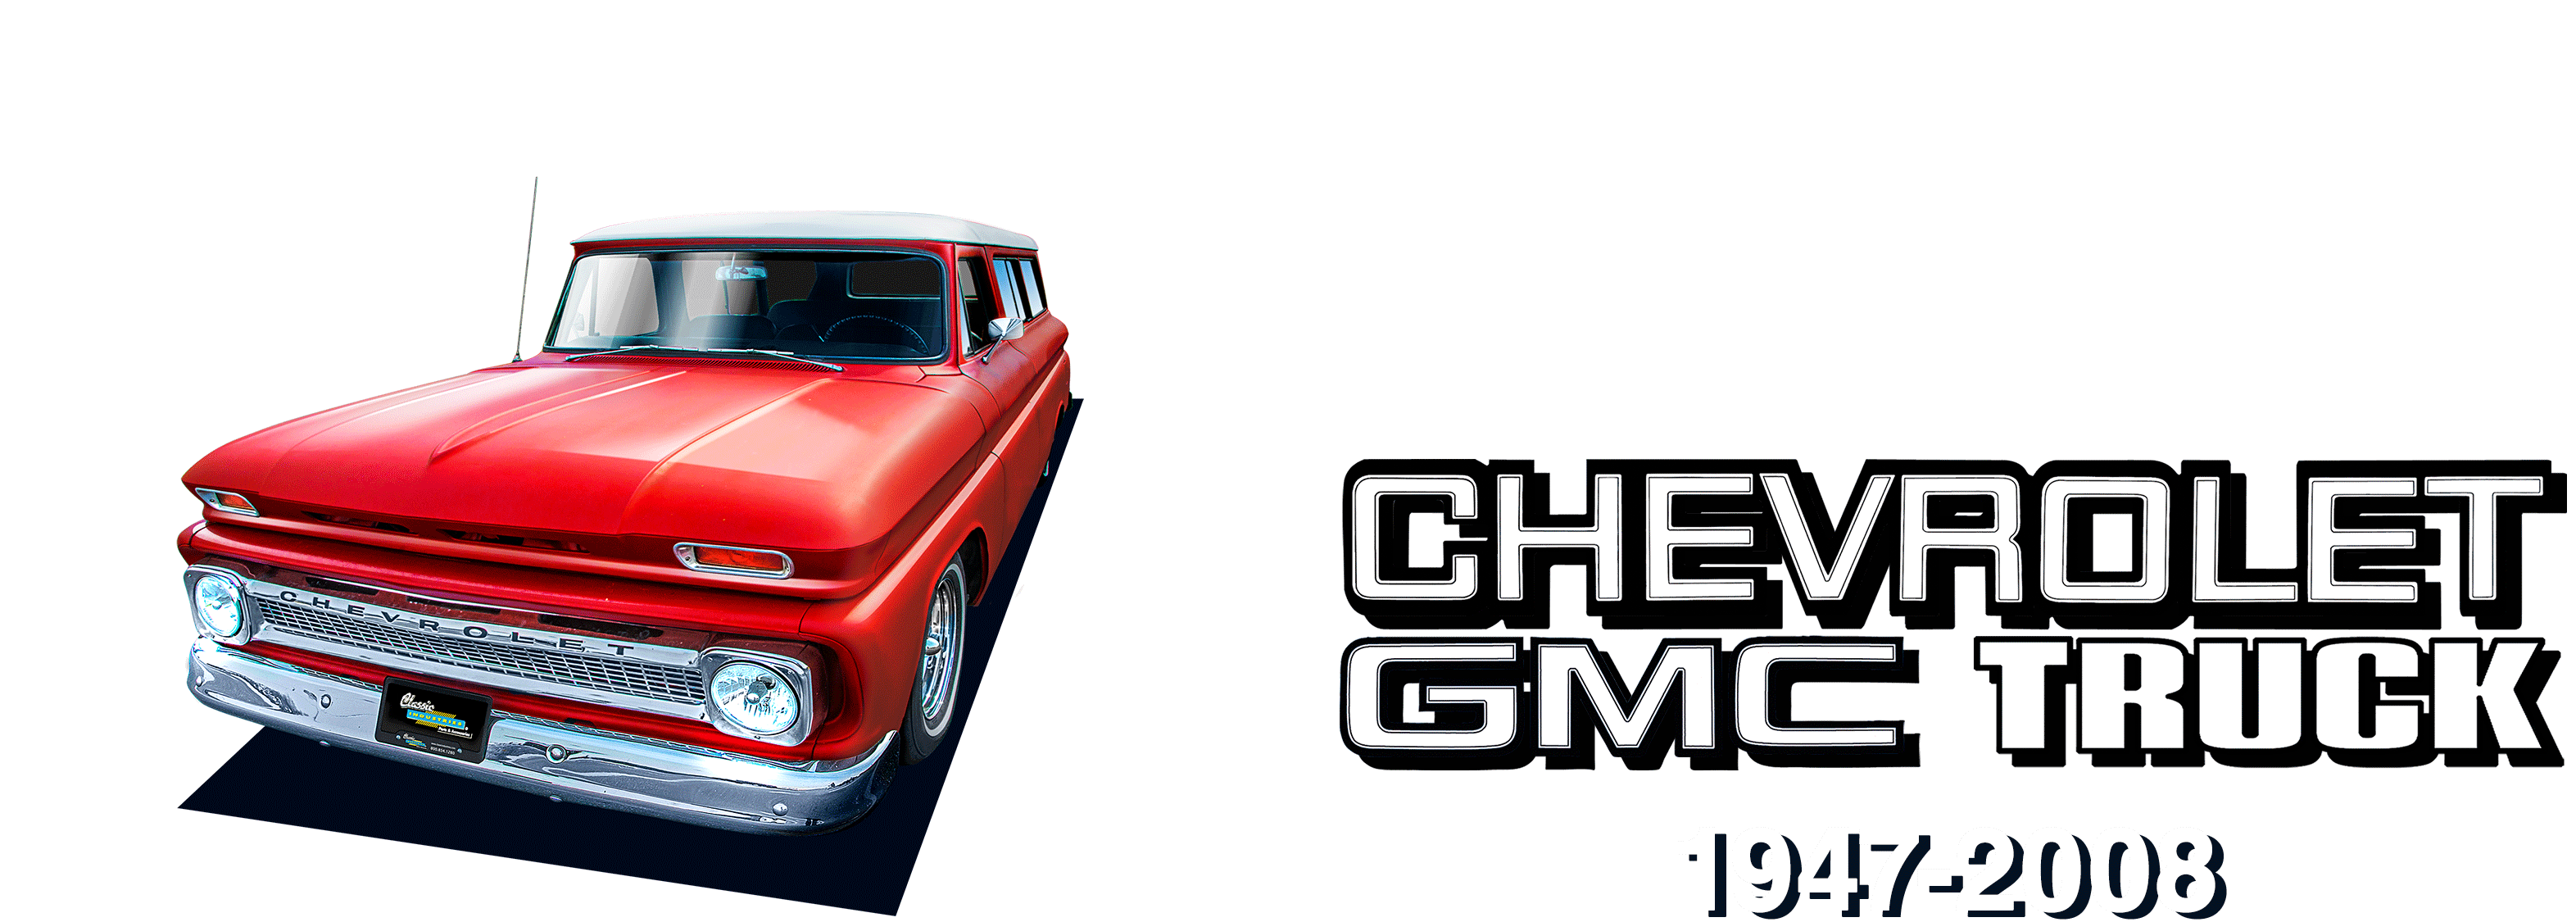 classic chevy van parts